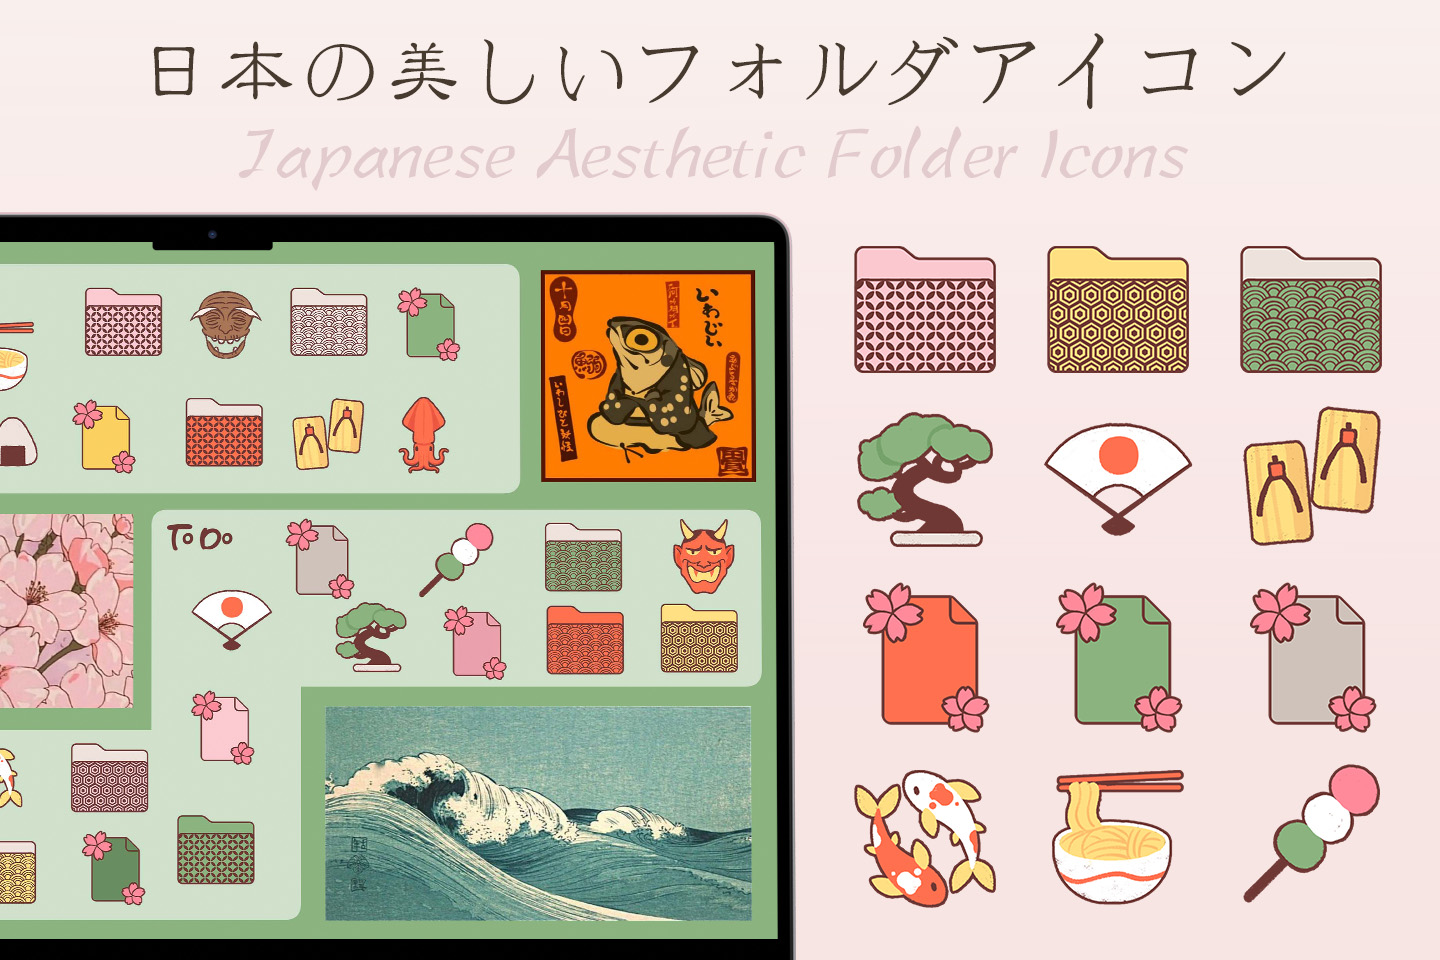 japanese aesthetic folder icons pack